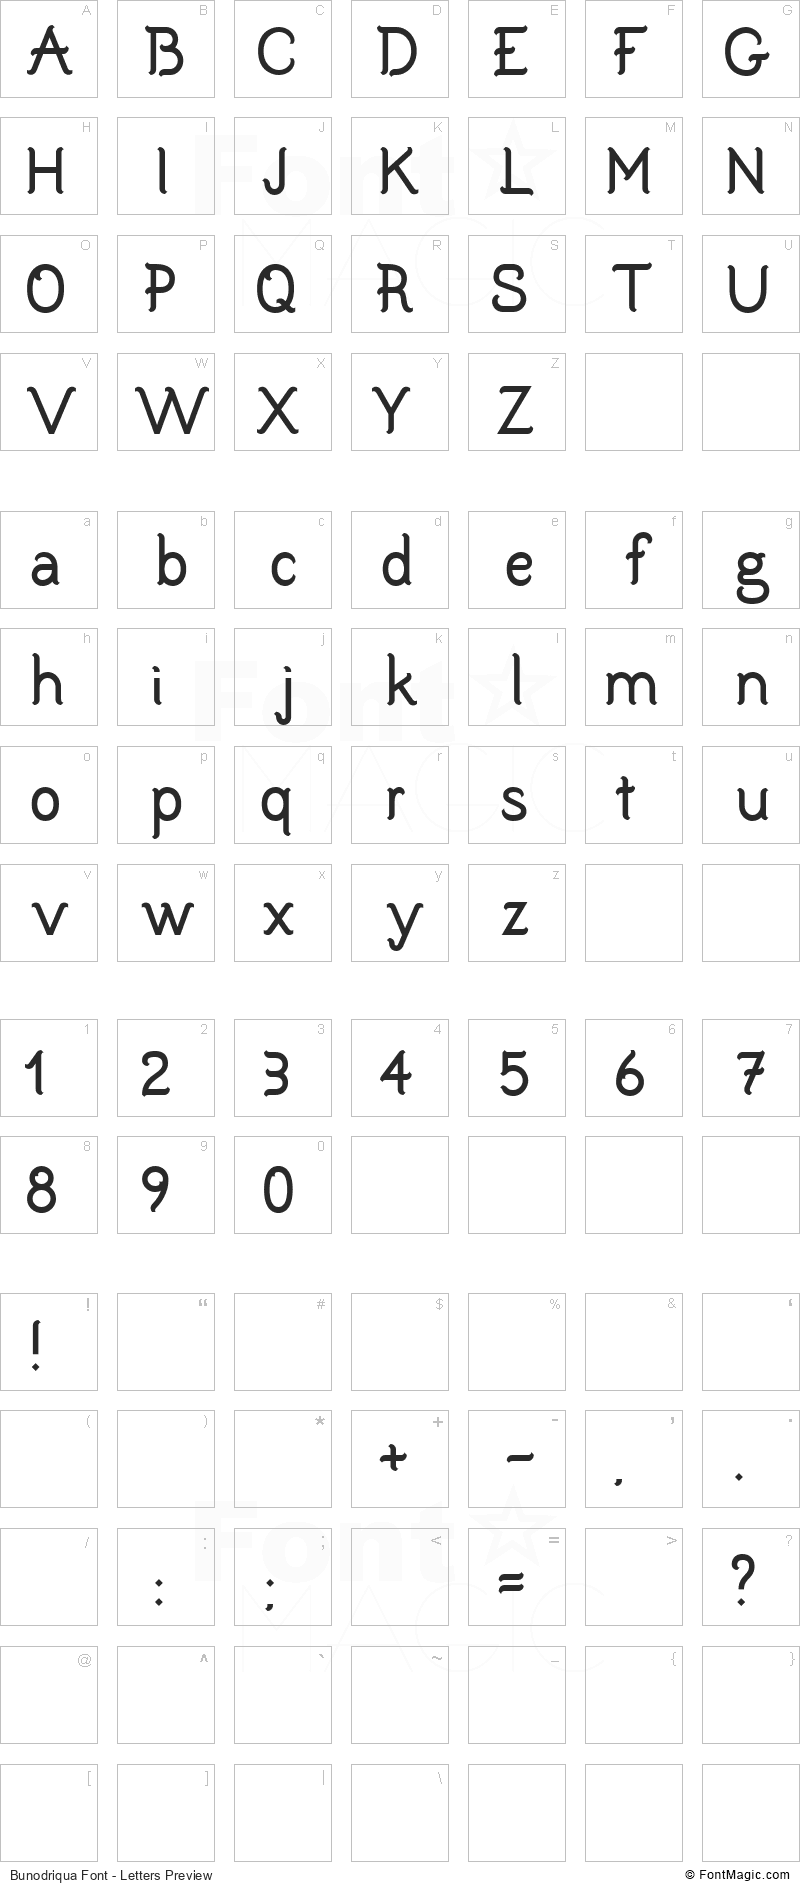 Bunodriqua Font - All Latters Preview Chart